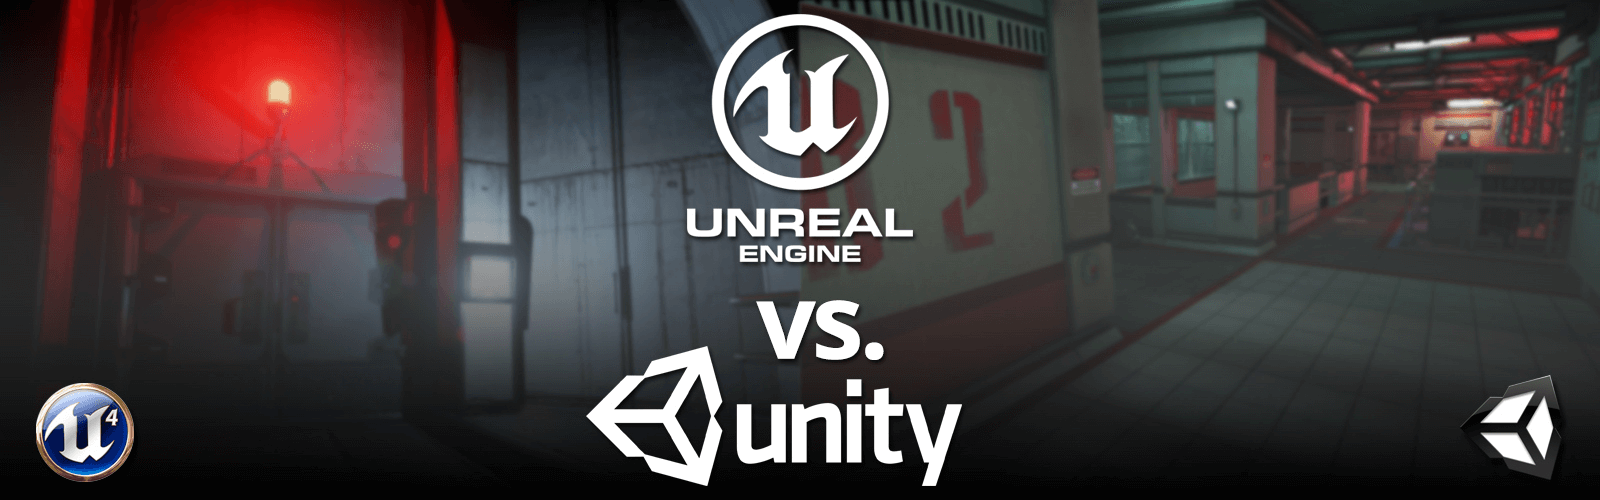 Unity3D или Unreal Engine 4